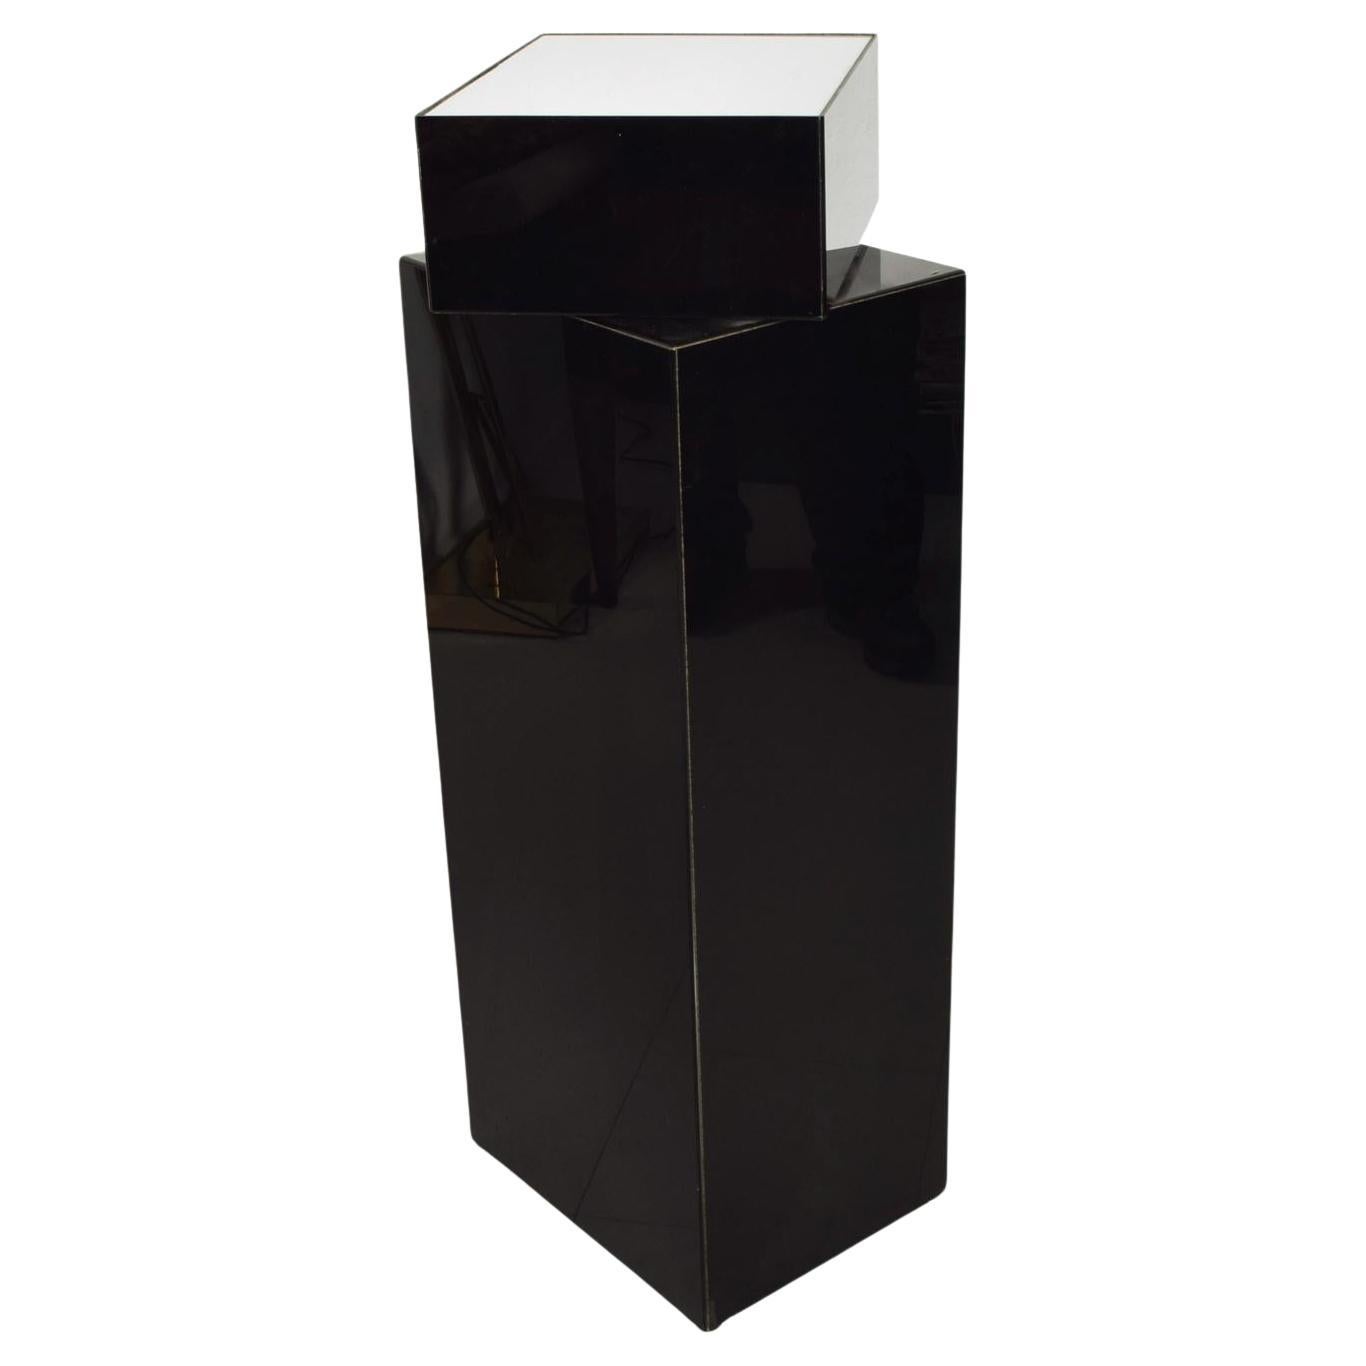 1980s Post Modern Black & White Acrylic Pillar Sculptural Pedestal Stand